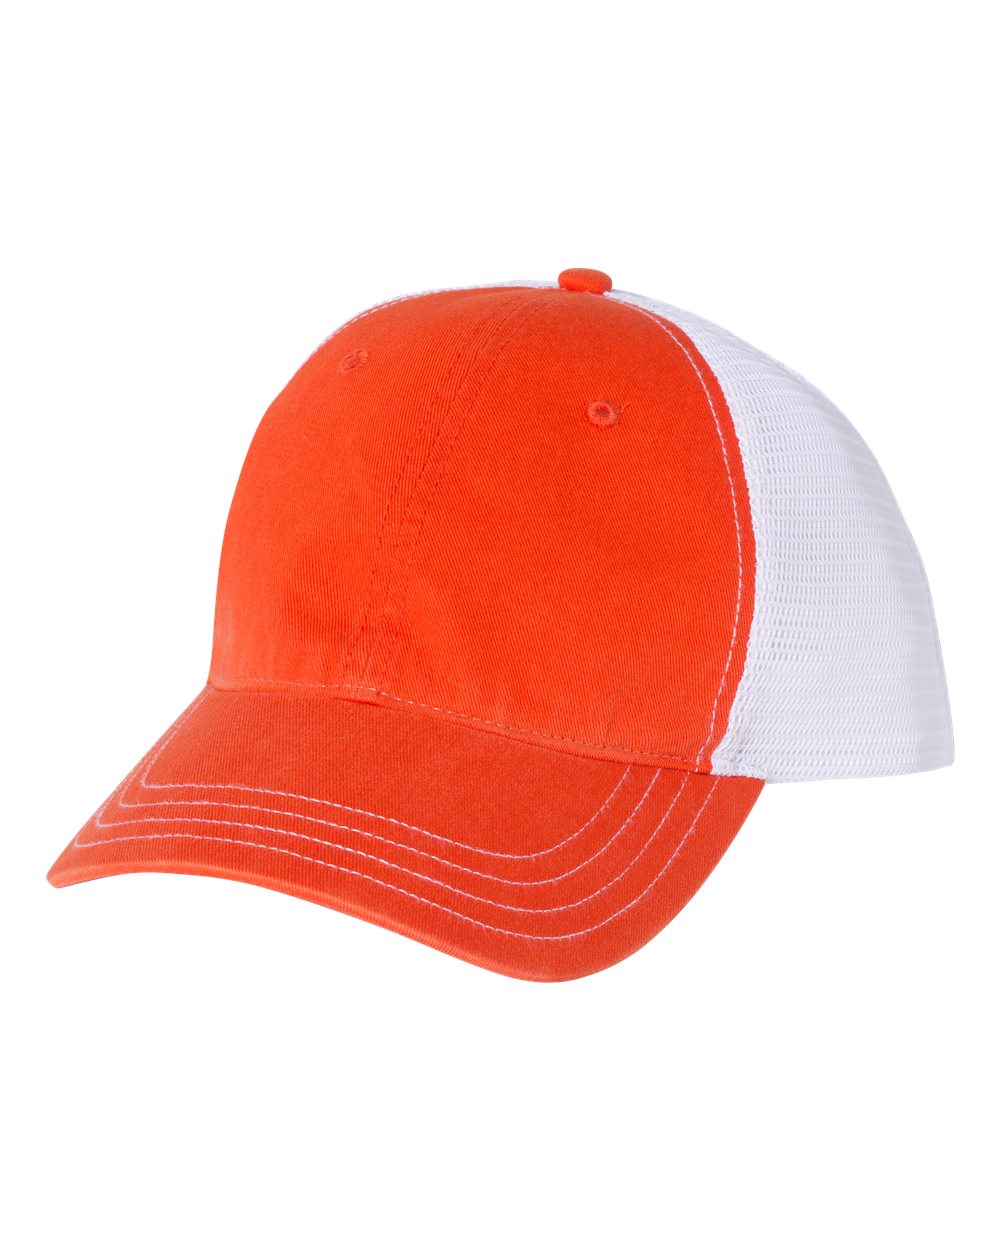 richardson cap orange white